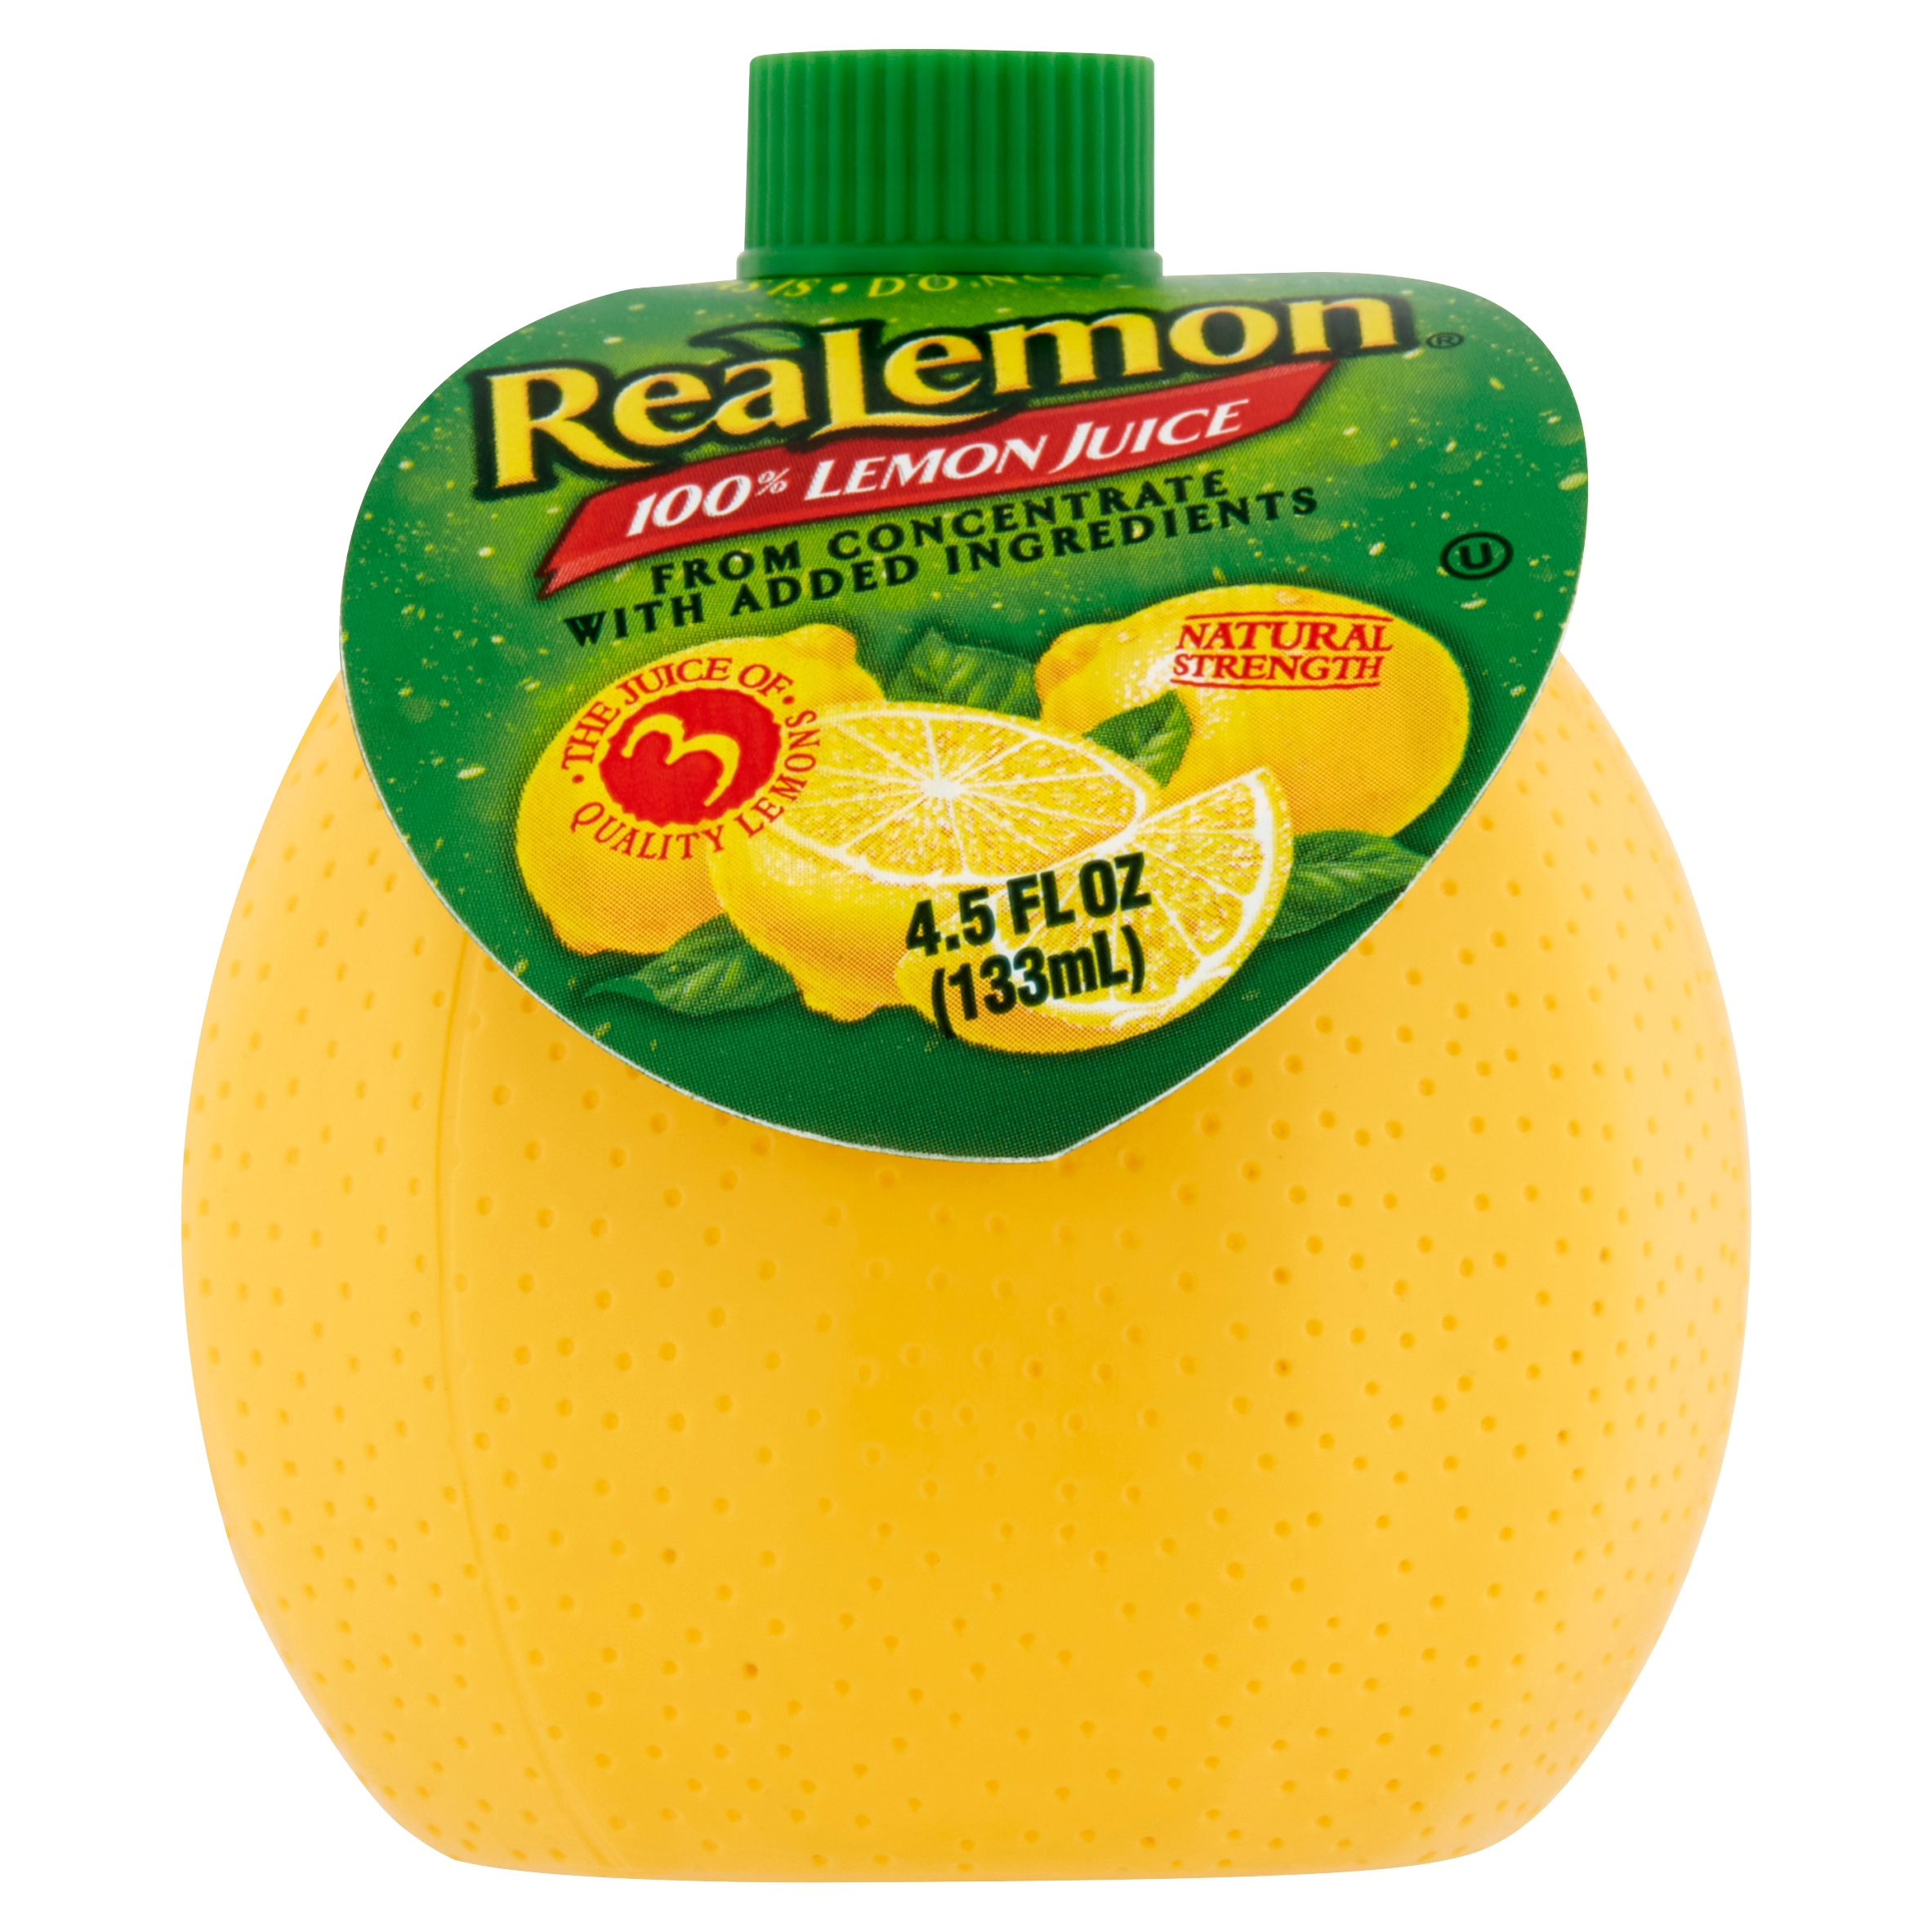 ReaLemon 100% Lemon Juice, 4.5 fl oz bottle - image 2 of 5